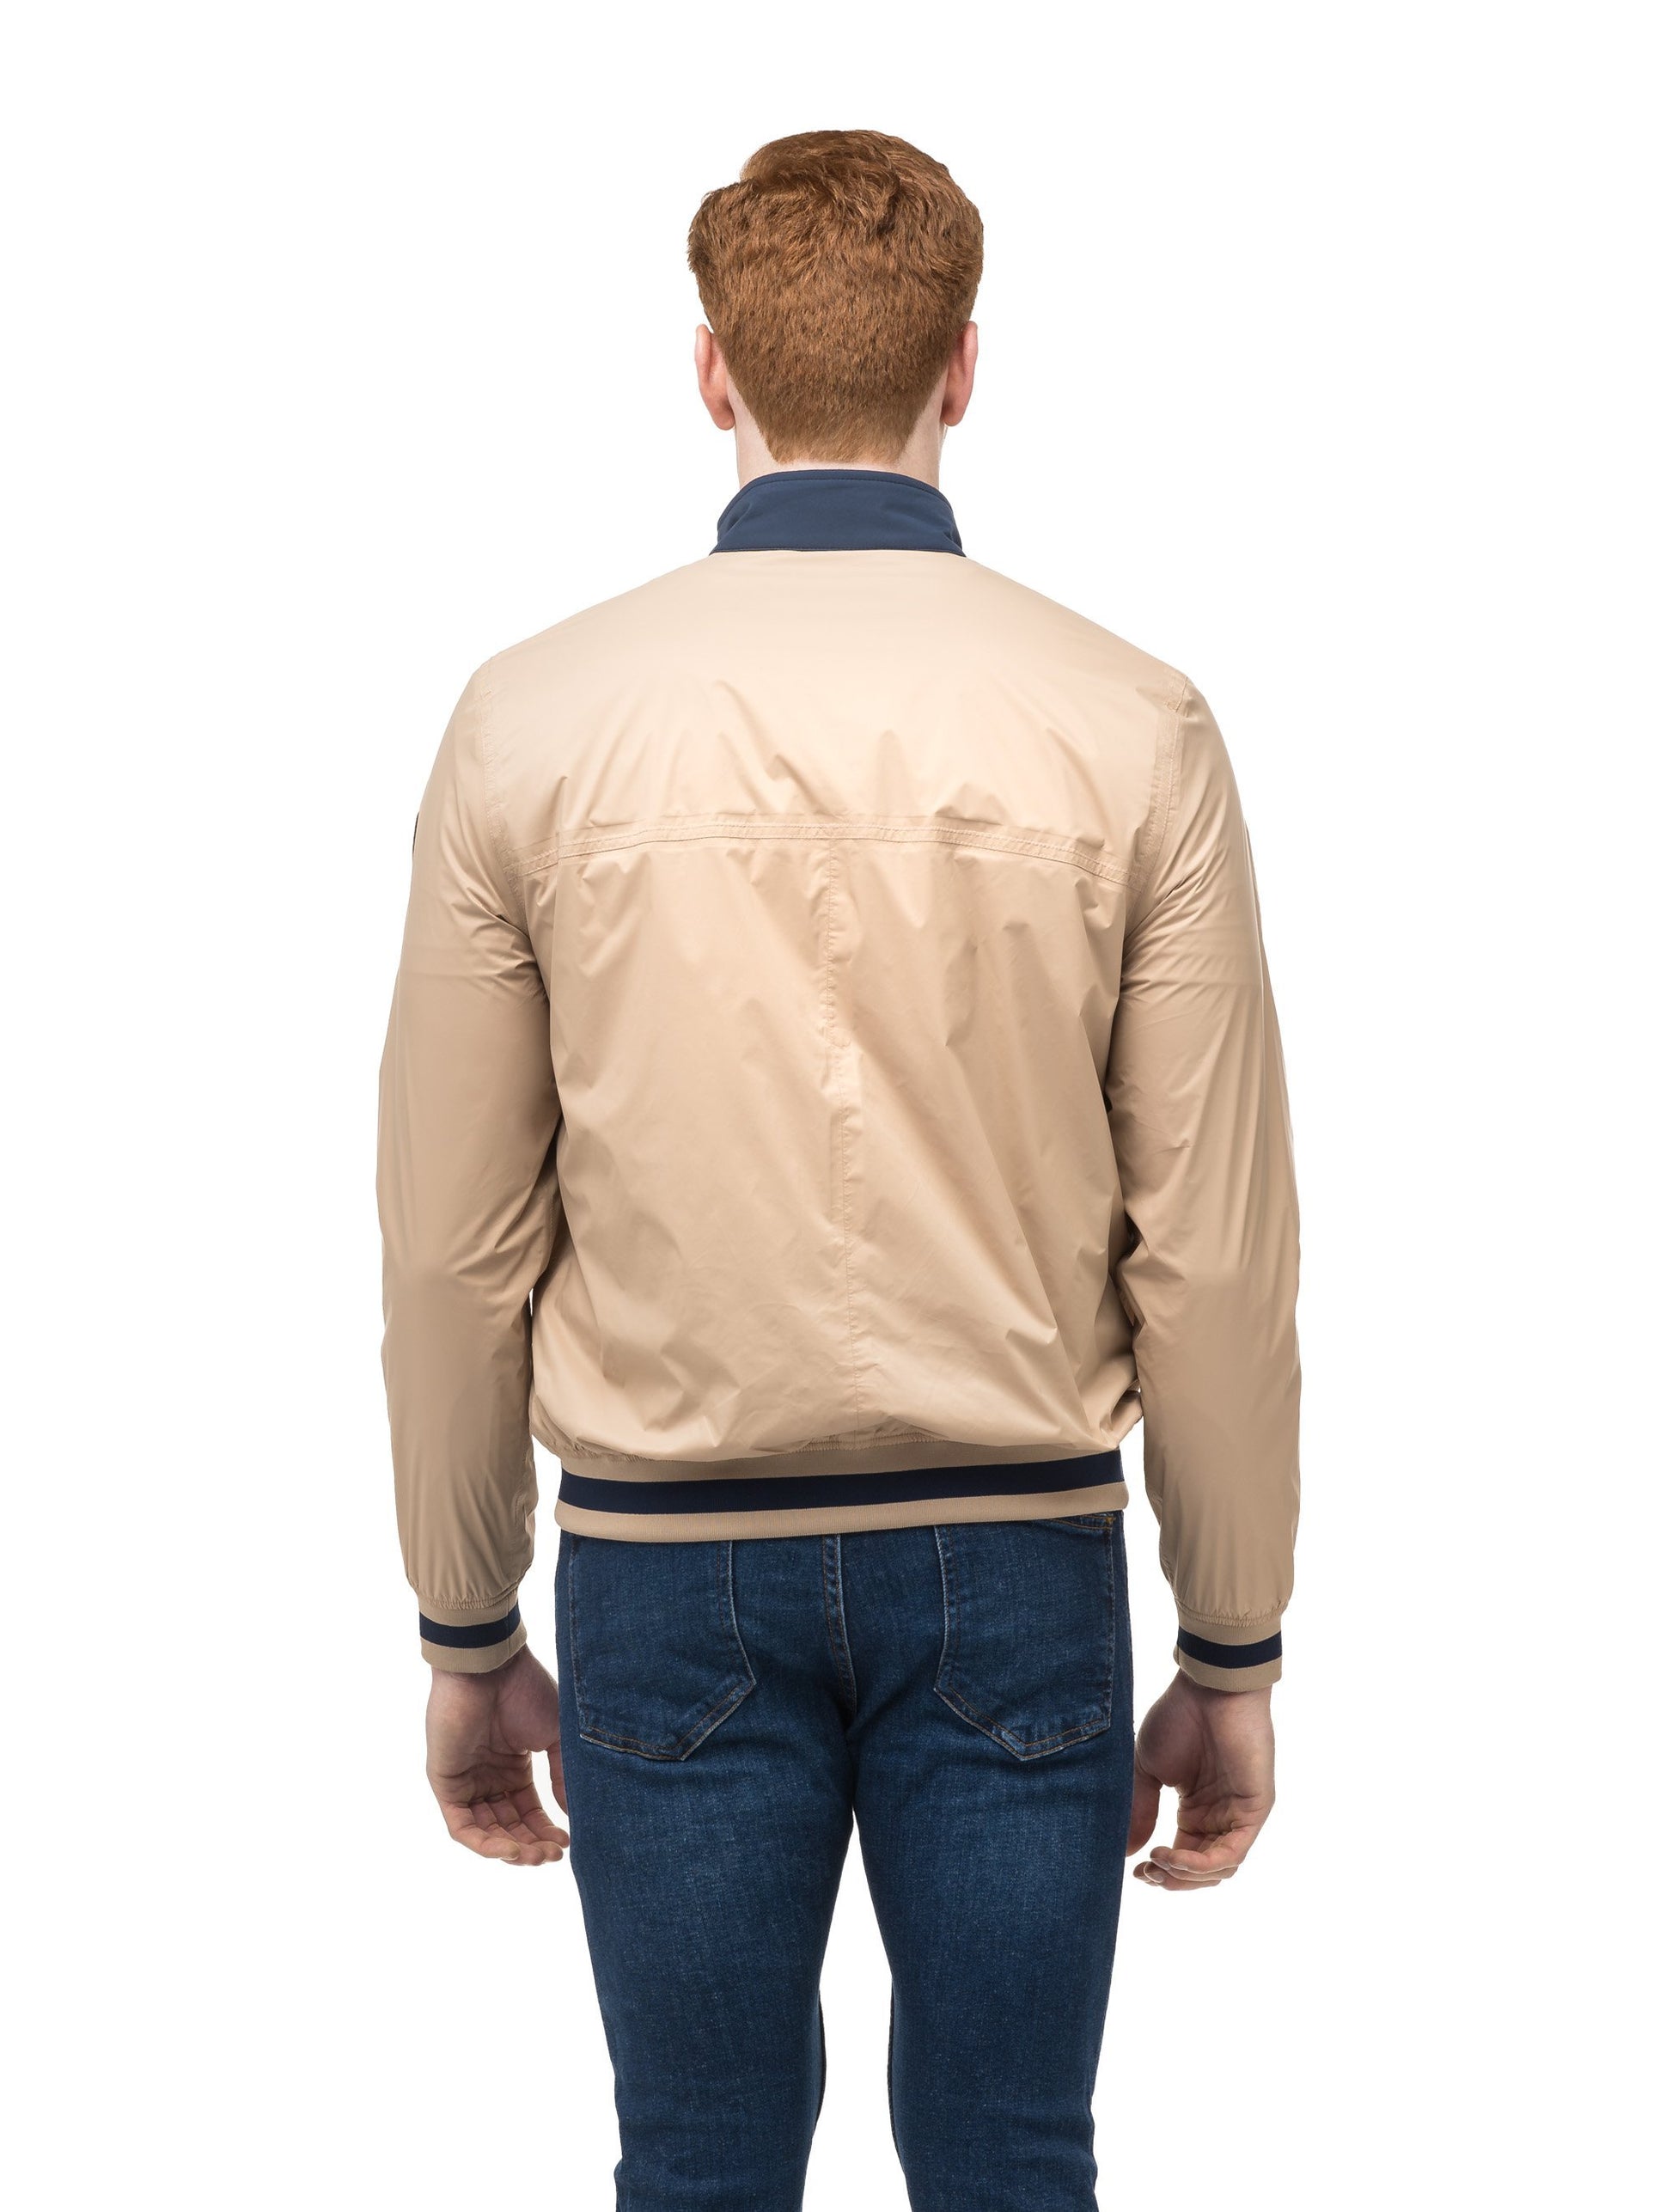 Men's lightweight taffeta bomber jacket with dark contrast trim in Fawn